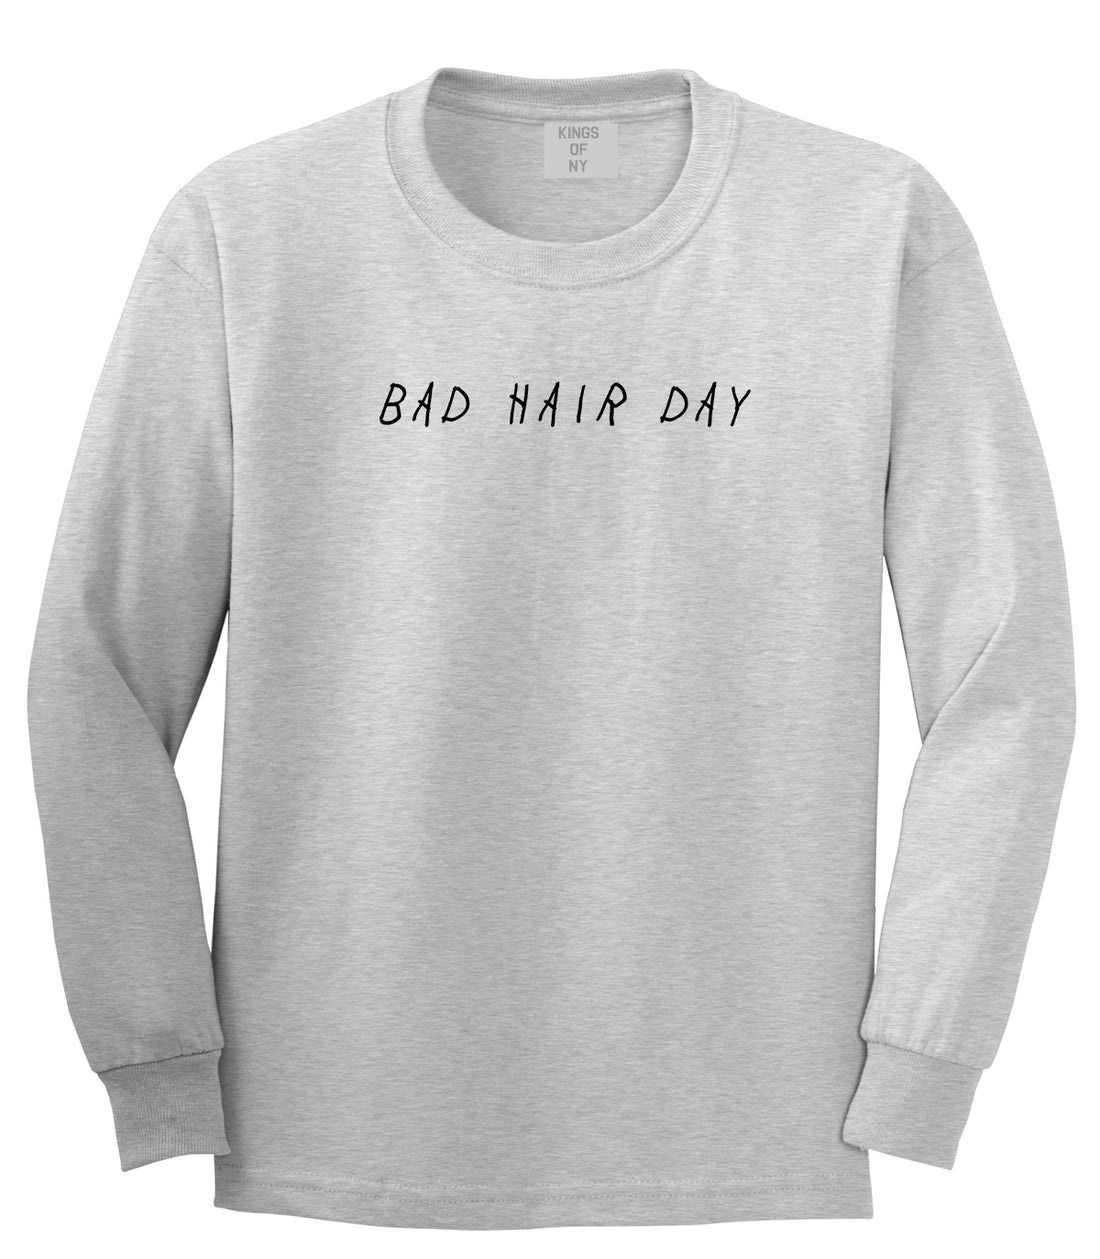 Bad Hair Day Grey Long Sleeve T-Shirt by Kings Of NY